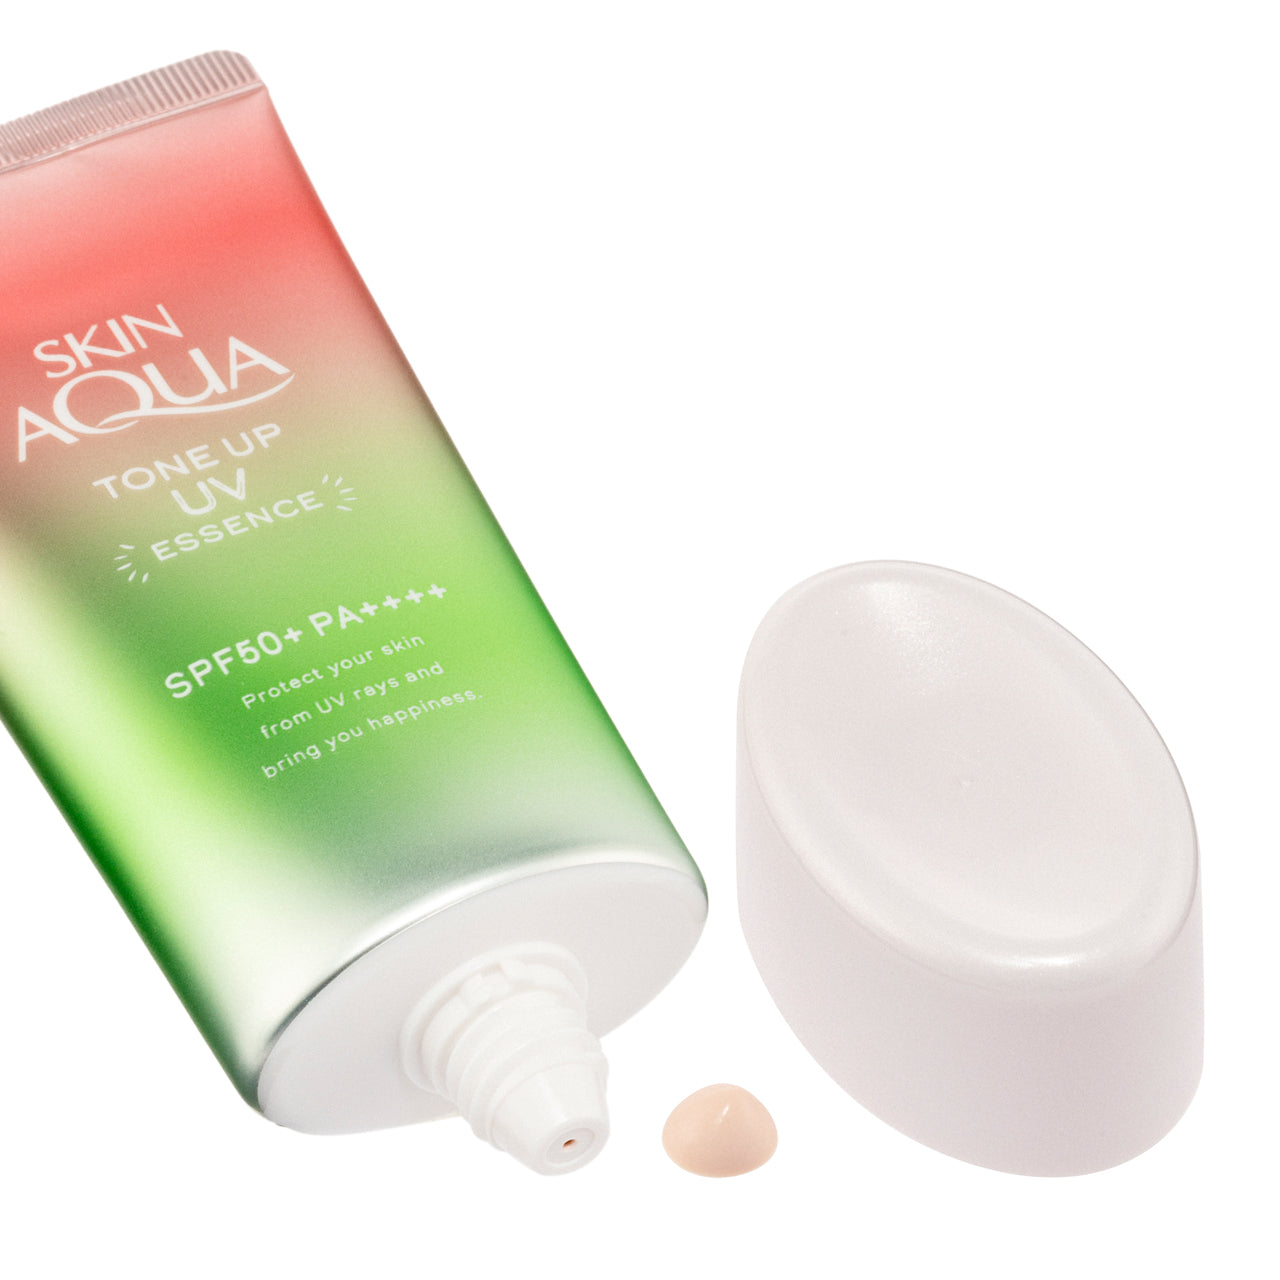 Mentholatum Sunplay Skin Aqua Tone-Up Uv Essence 80G | Sasa Global eShop